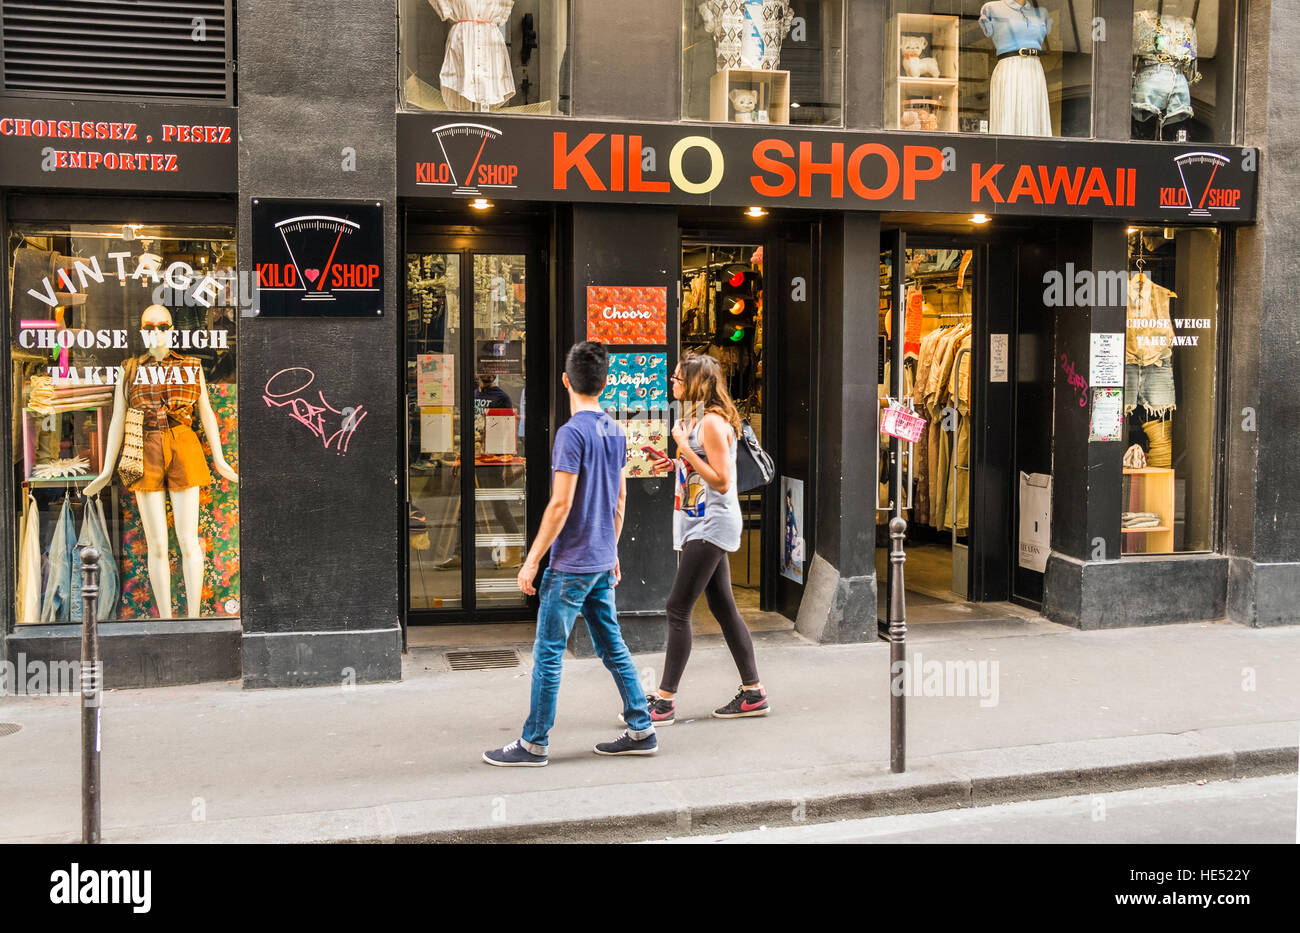 Kawaii, kilo, boutique de vêtements de seconde main Banque D'Images